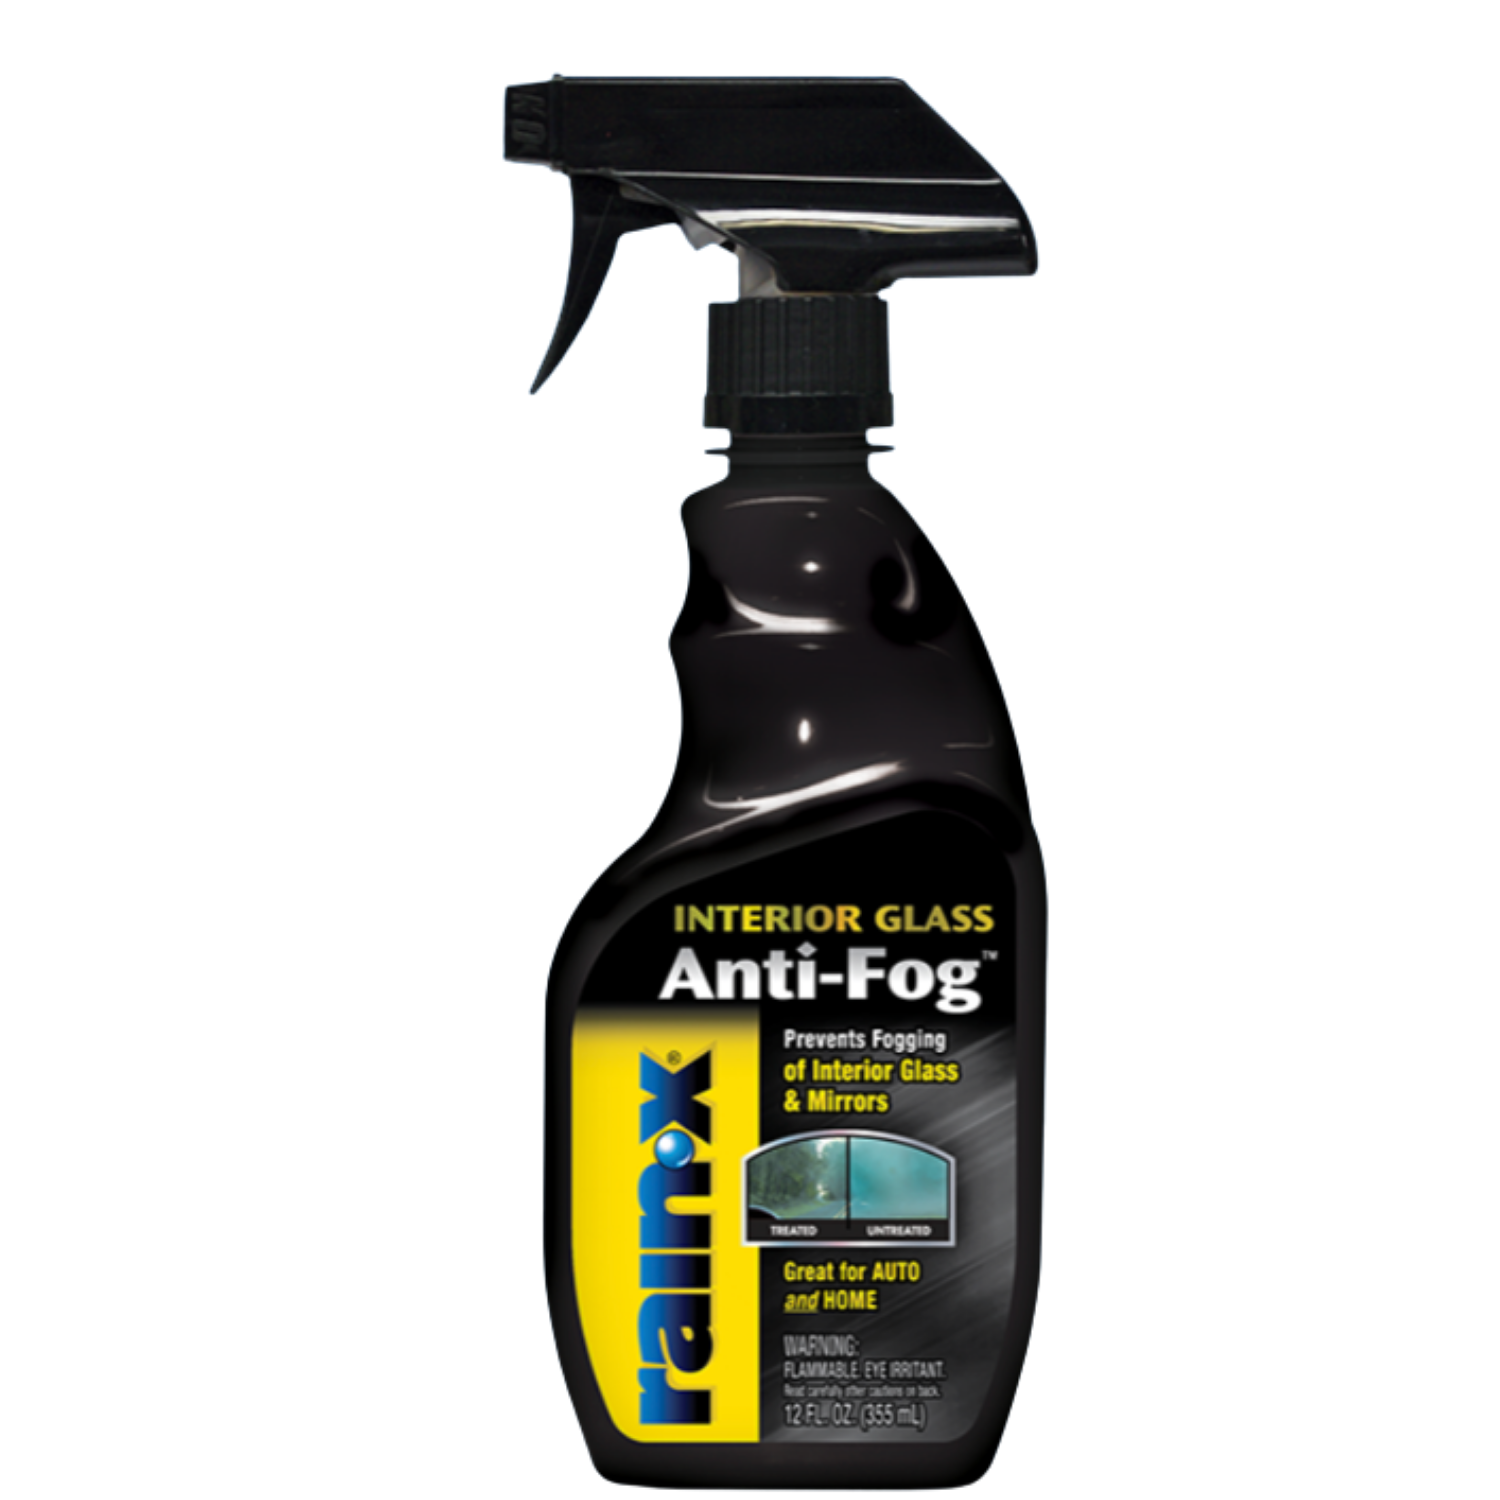 Rain-X Interior Glass Anti-Fog - 12 oz - Trigger Spray Bottle